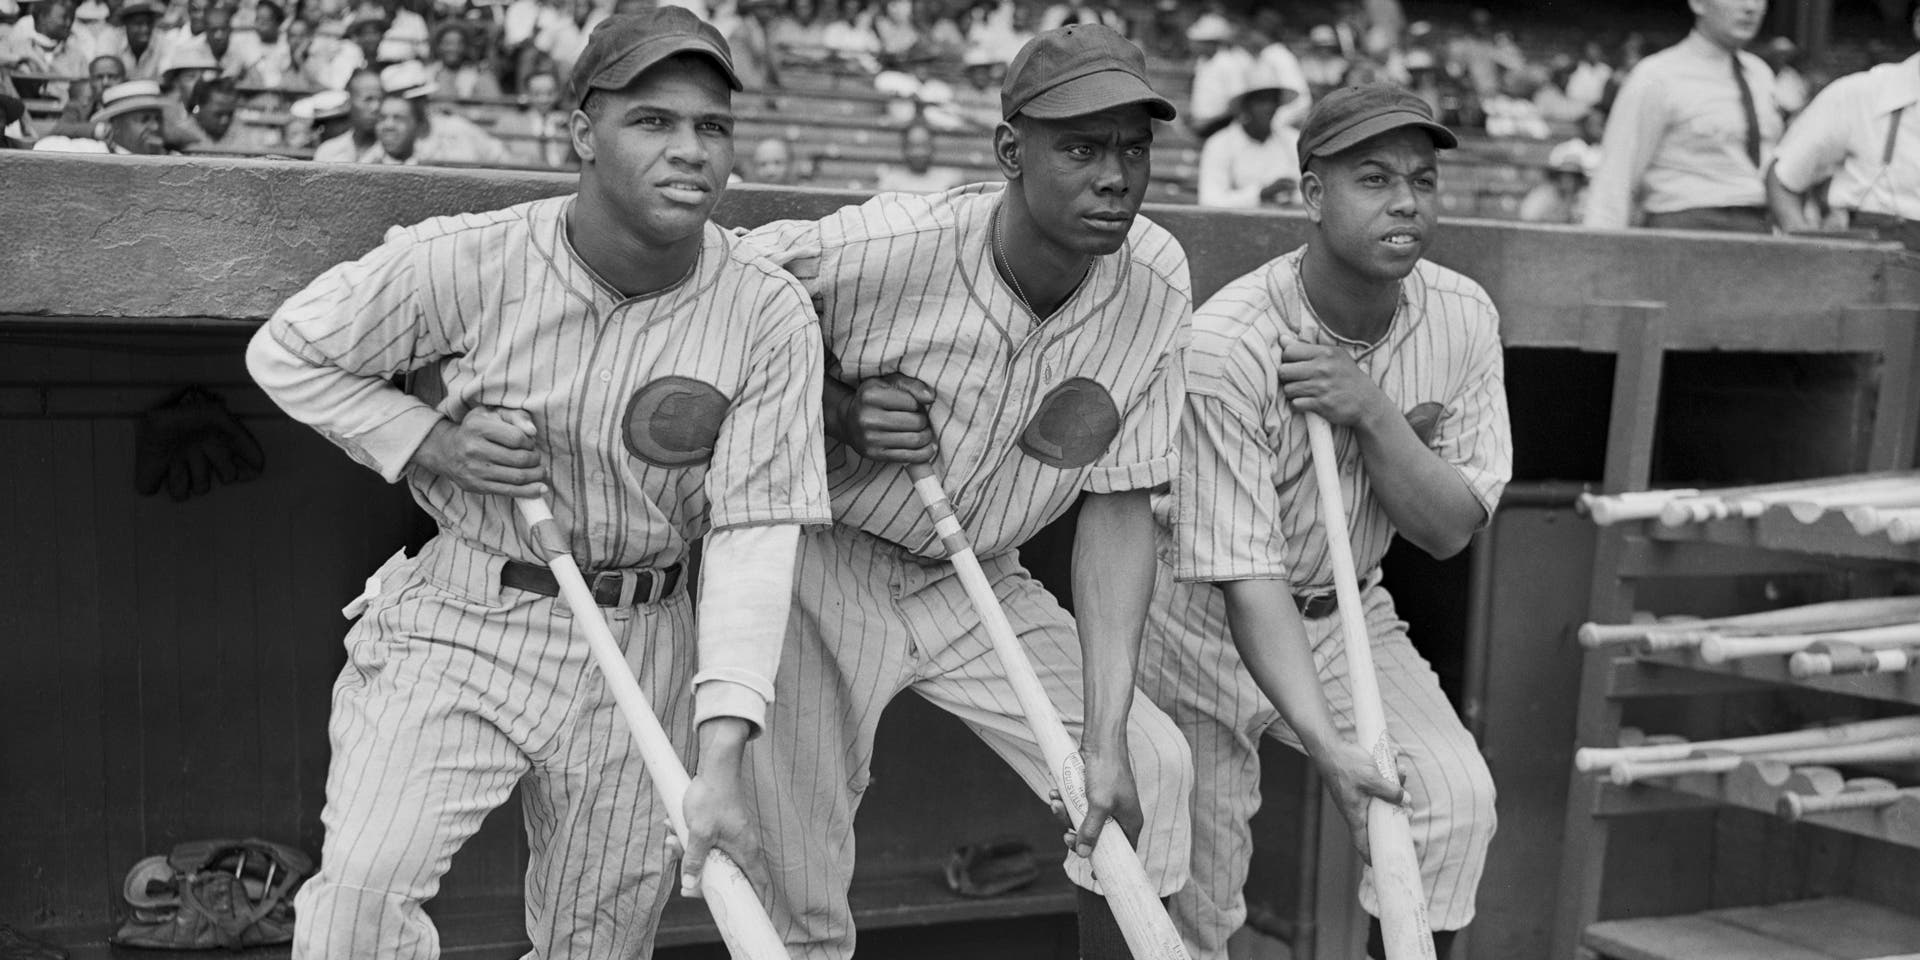 Negro League Baseball, Chicago Giants, 20th century Black history